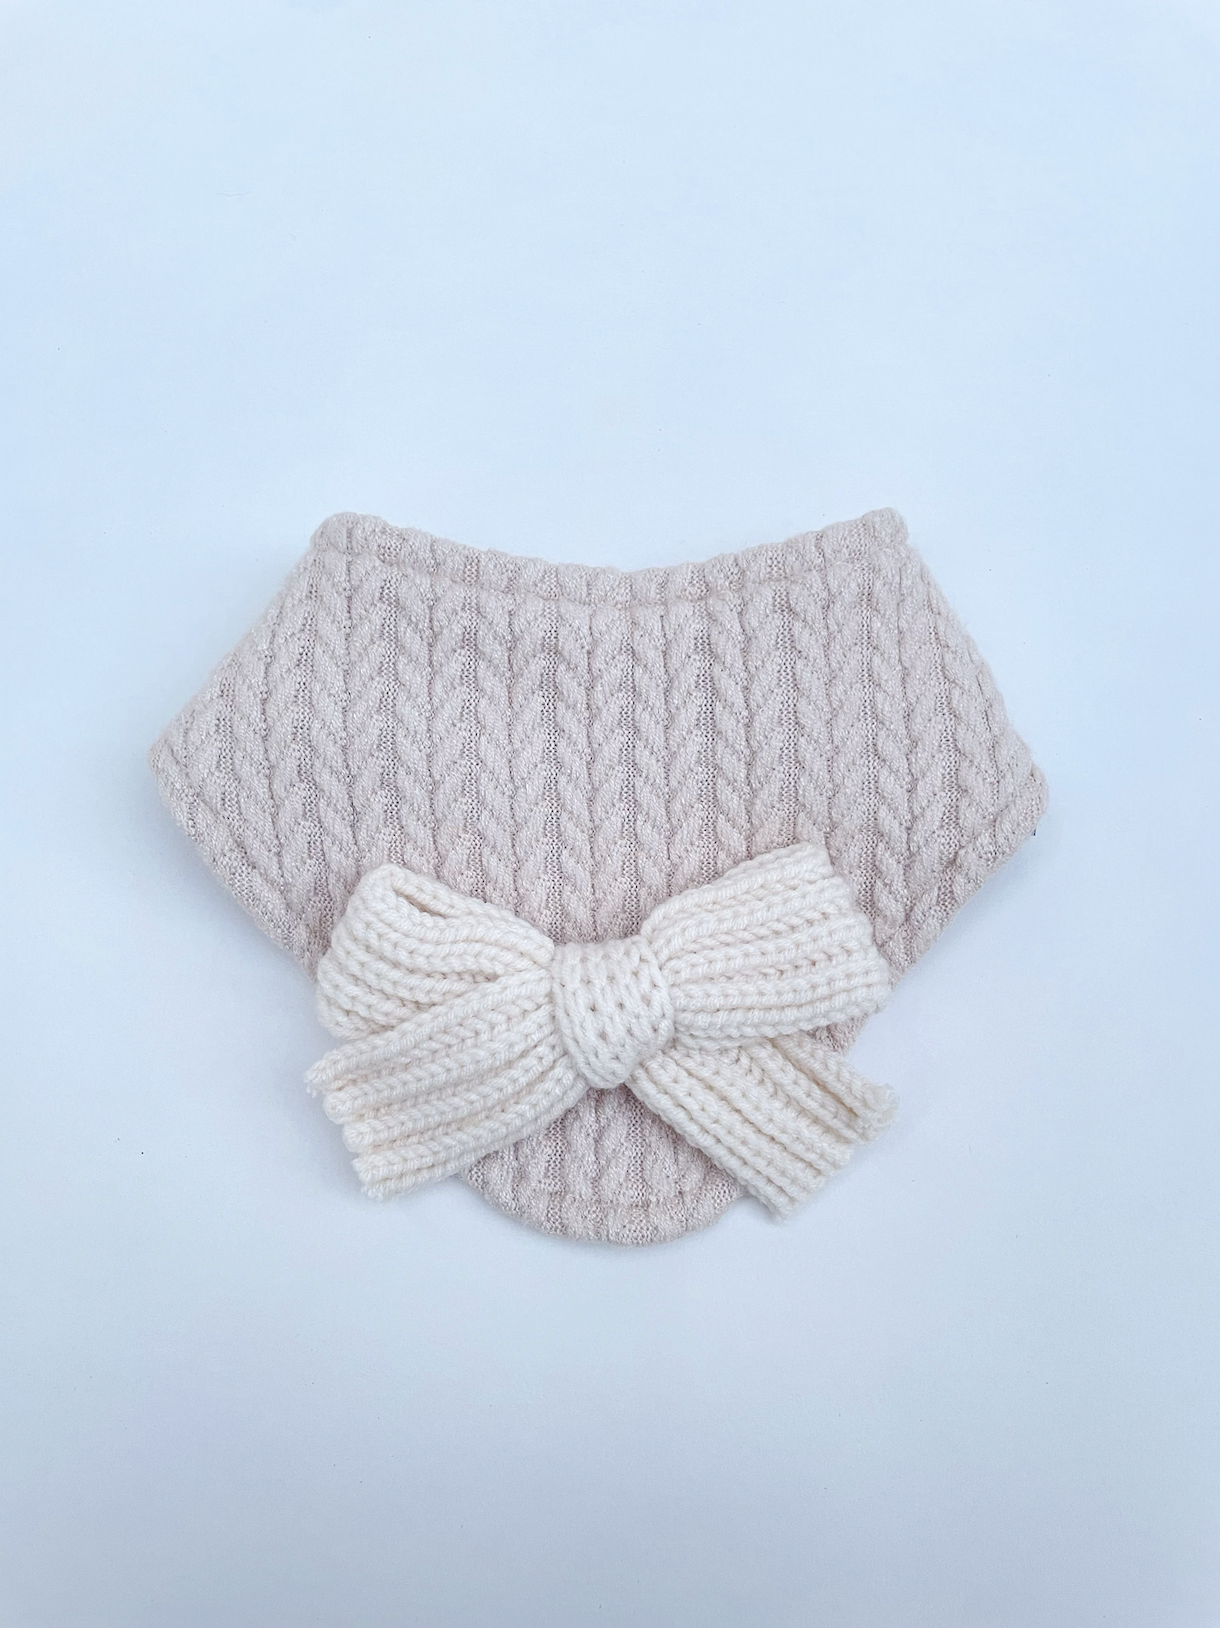 Bandana - Cream Sweater Rib Knit Fabric